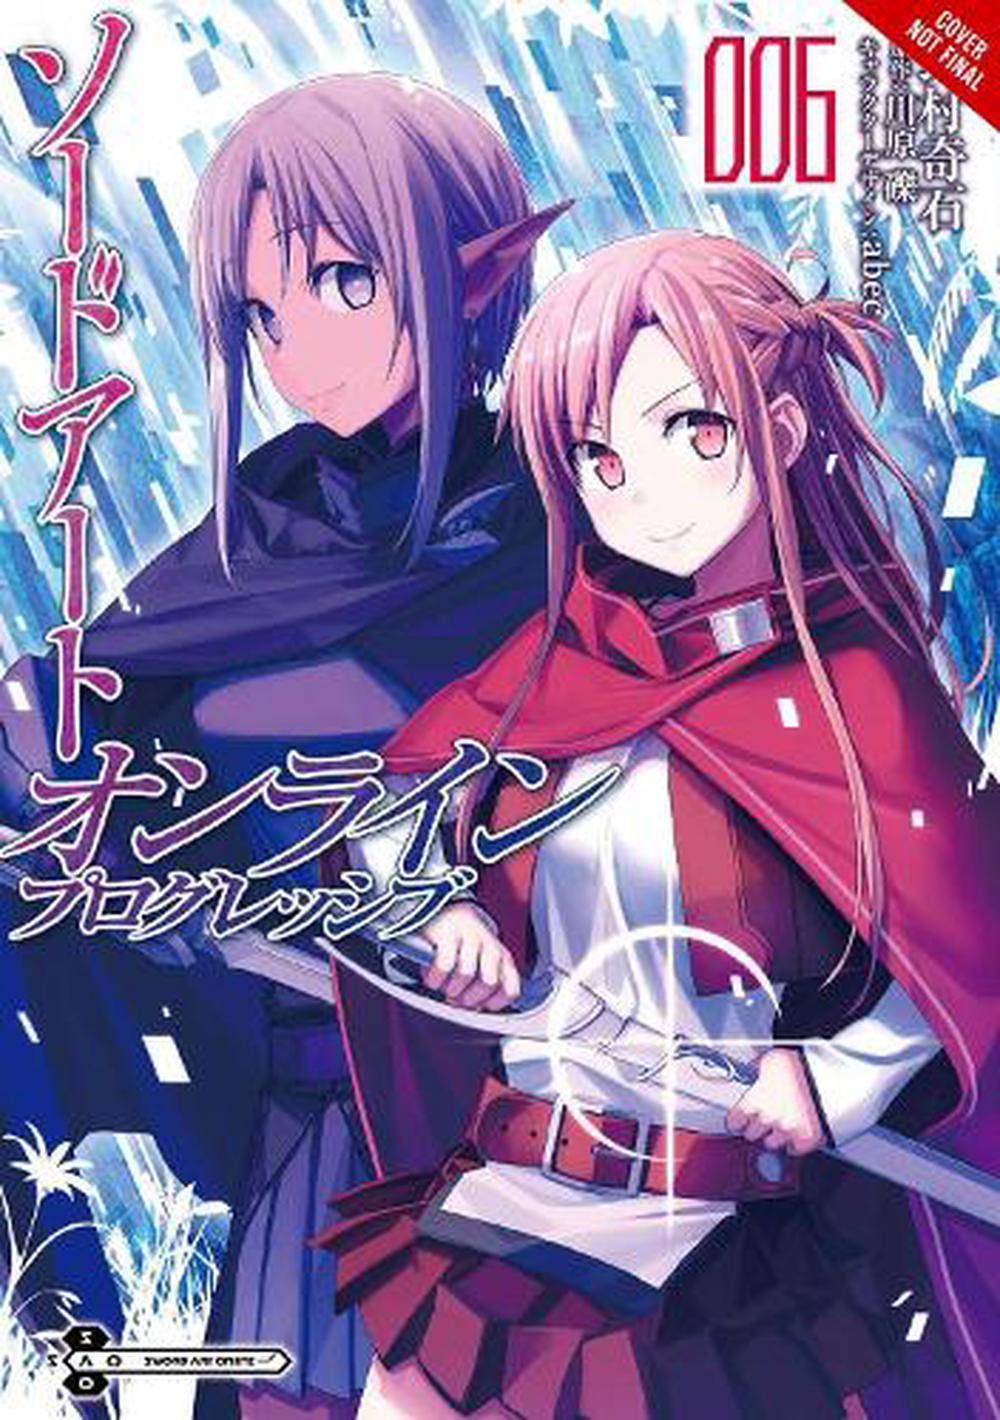 Sword Art Online Progressive, Vol. 6 (manga) by Reki